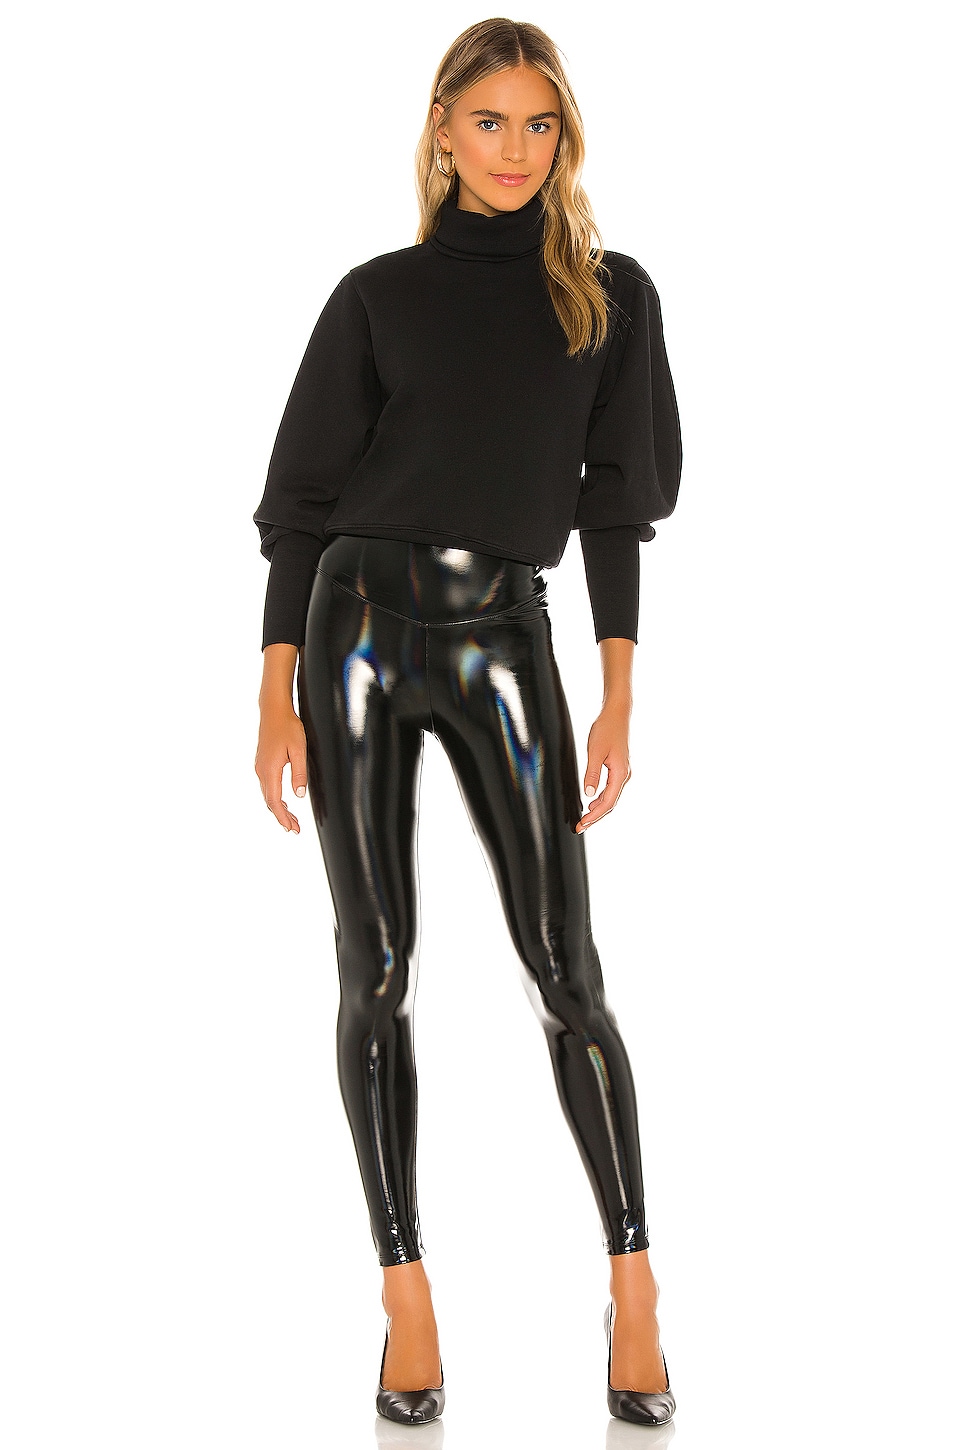 Black PVC Vinyl Leggings Outfit - 4k 